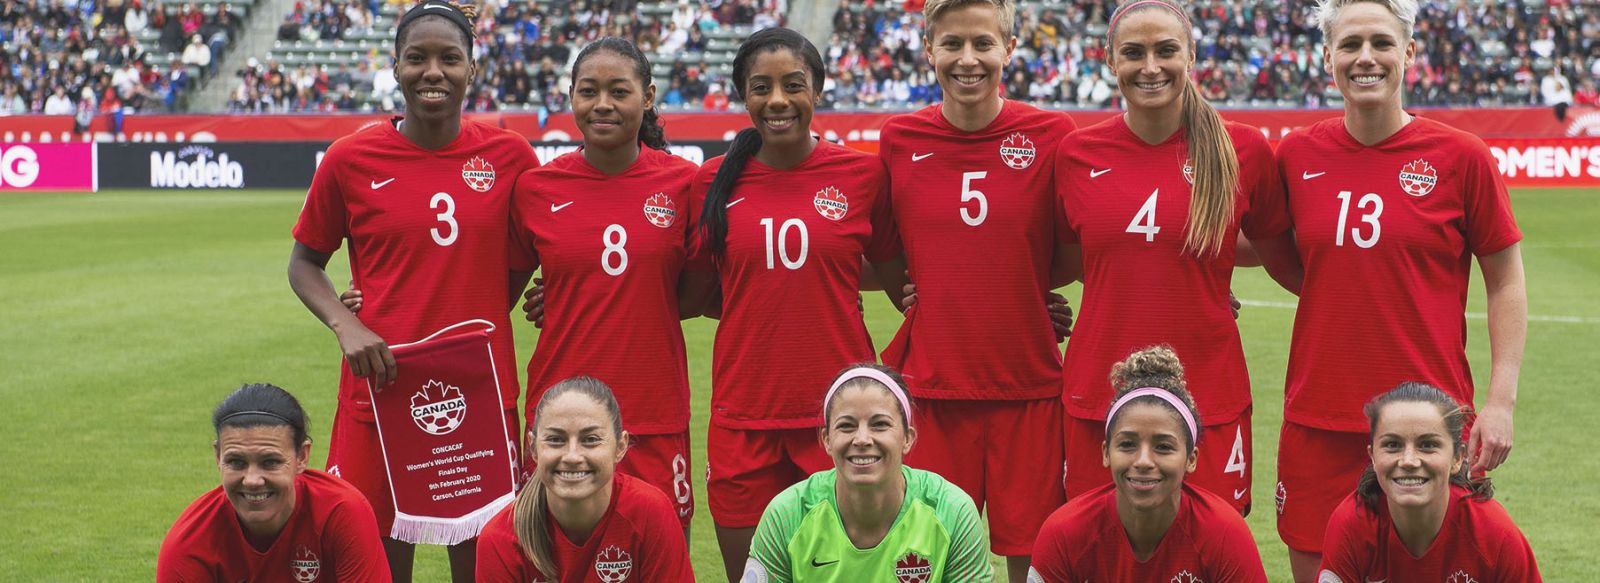 Canada Soccer announces squad for Women’s National Team Celebration Tour